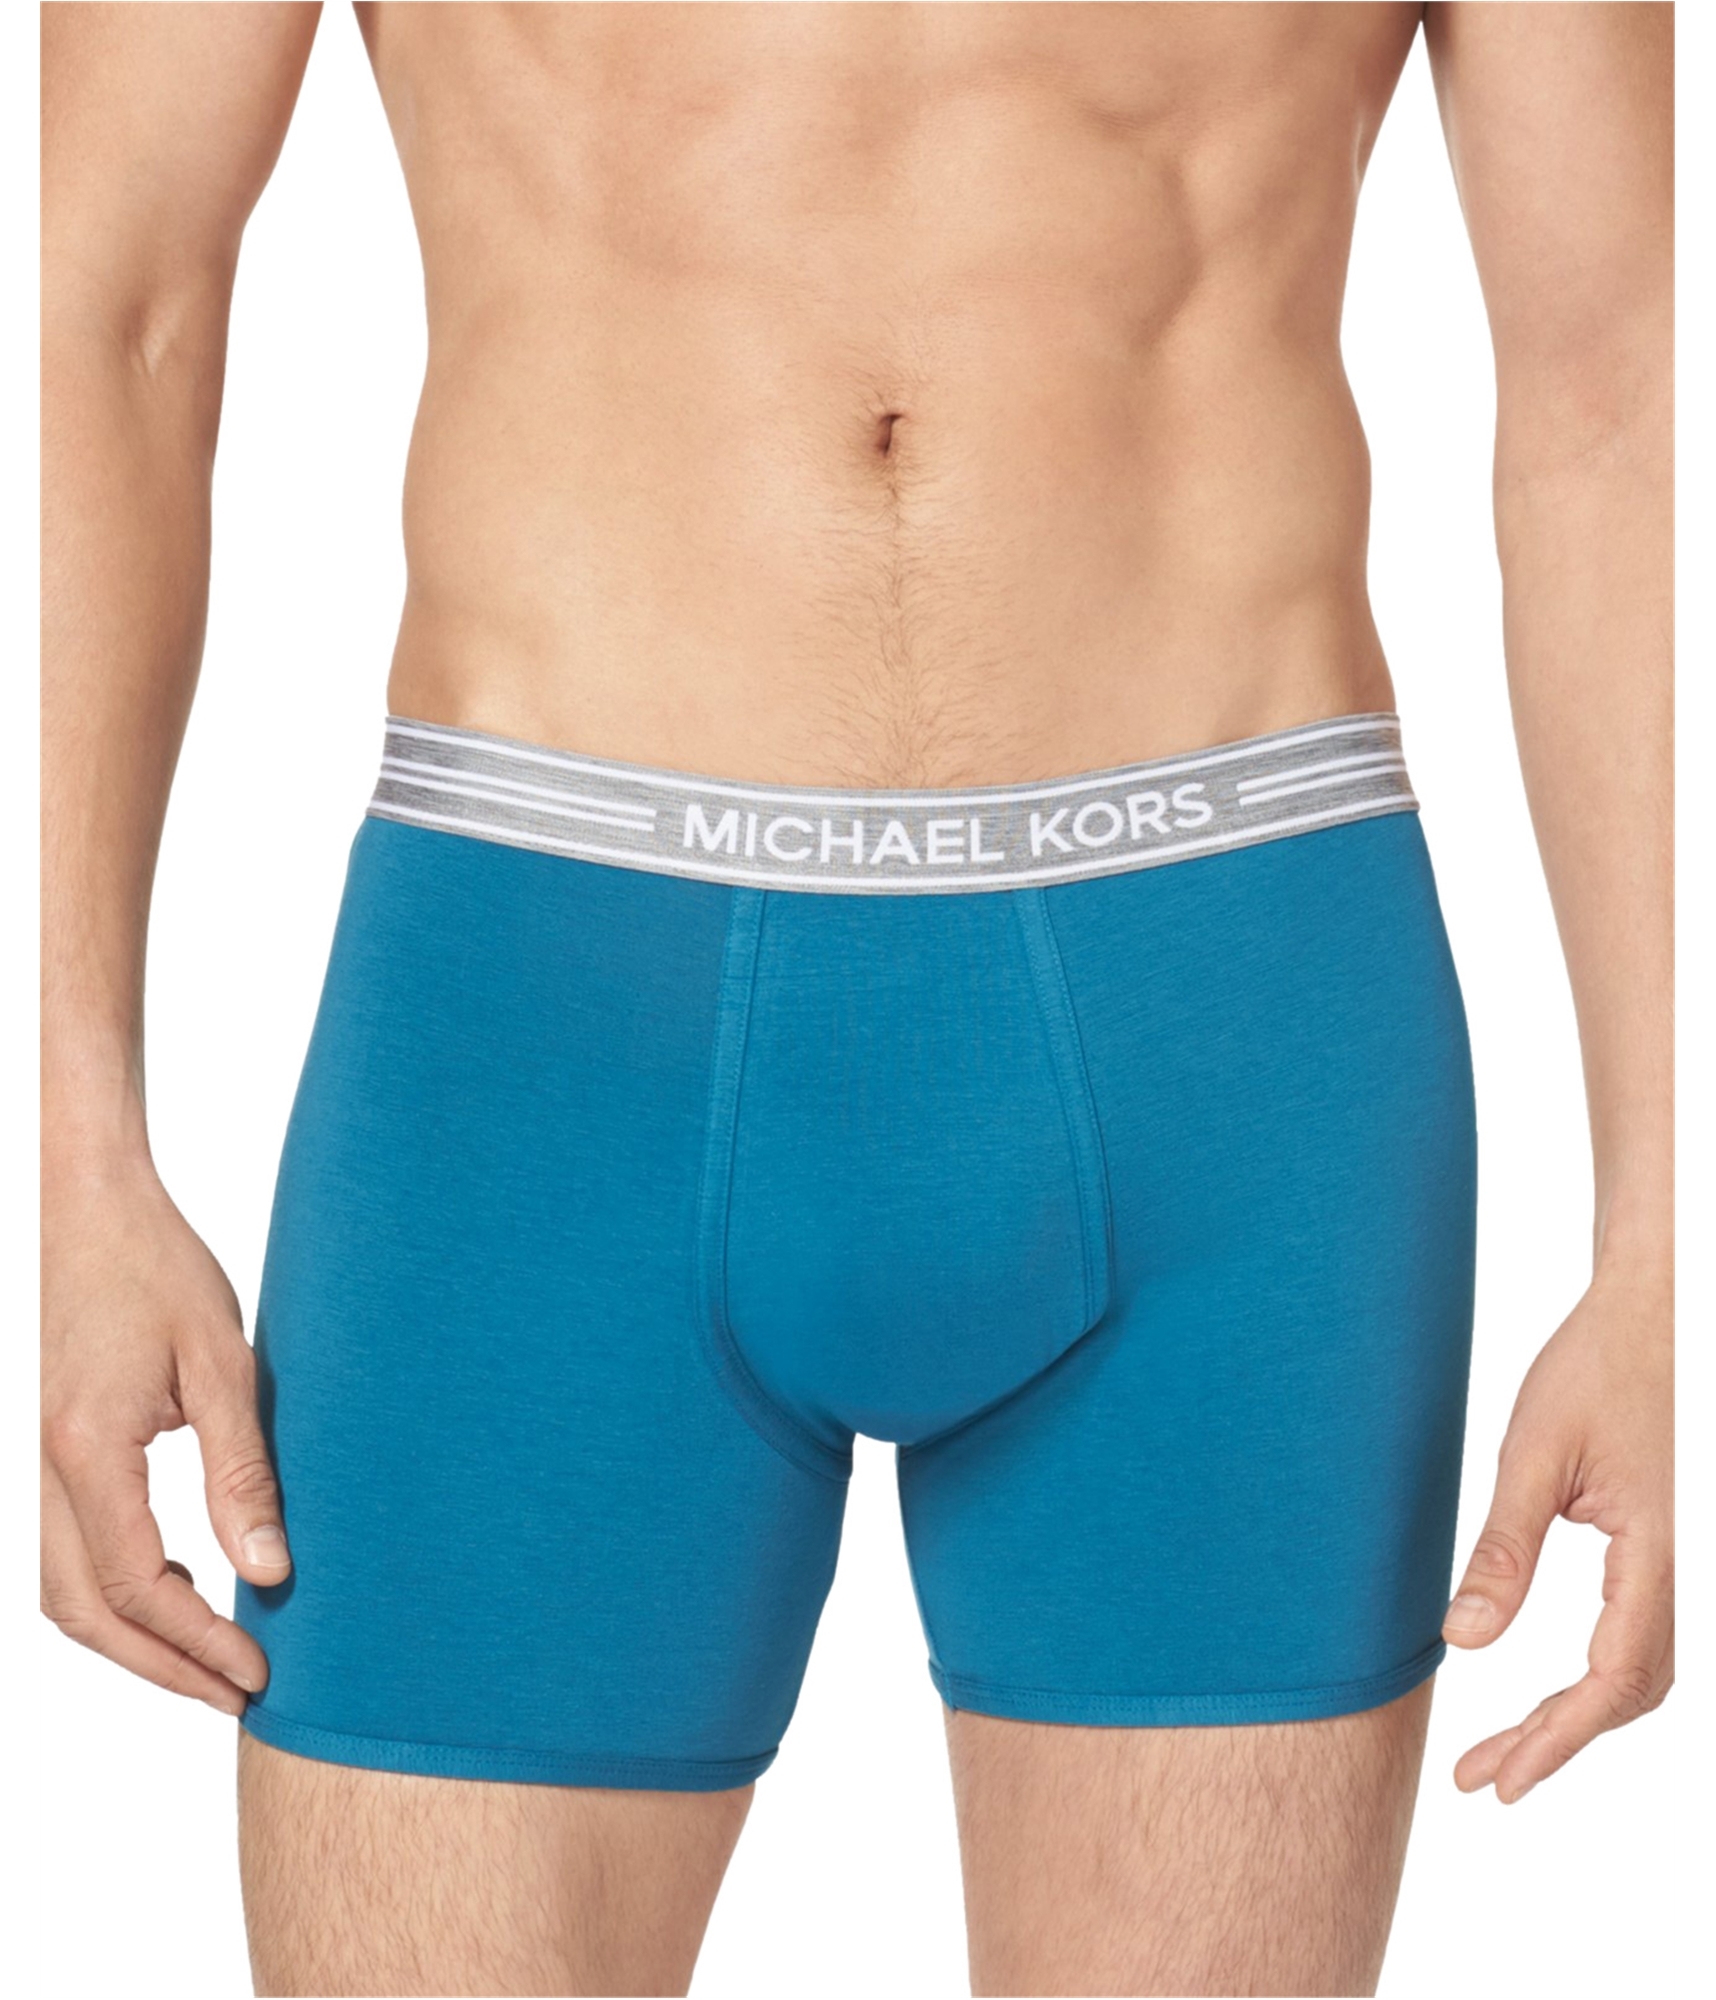 Buy a Michael Kors Mens Luxury Modal Cotton Underwear Boxer Briefs